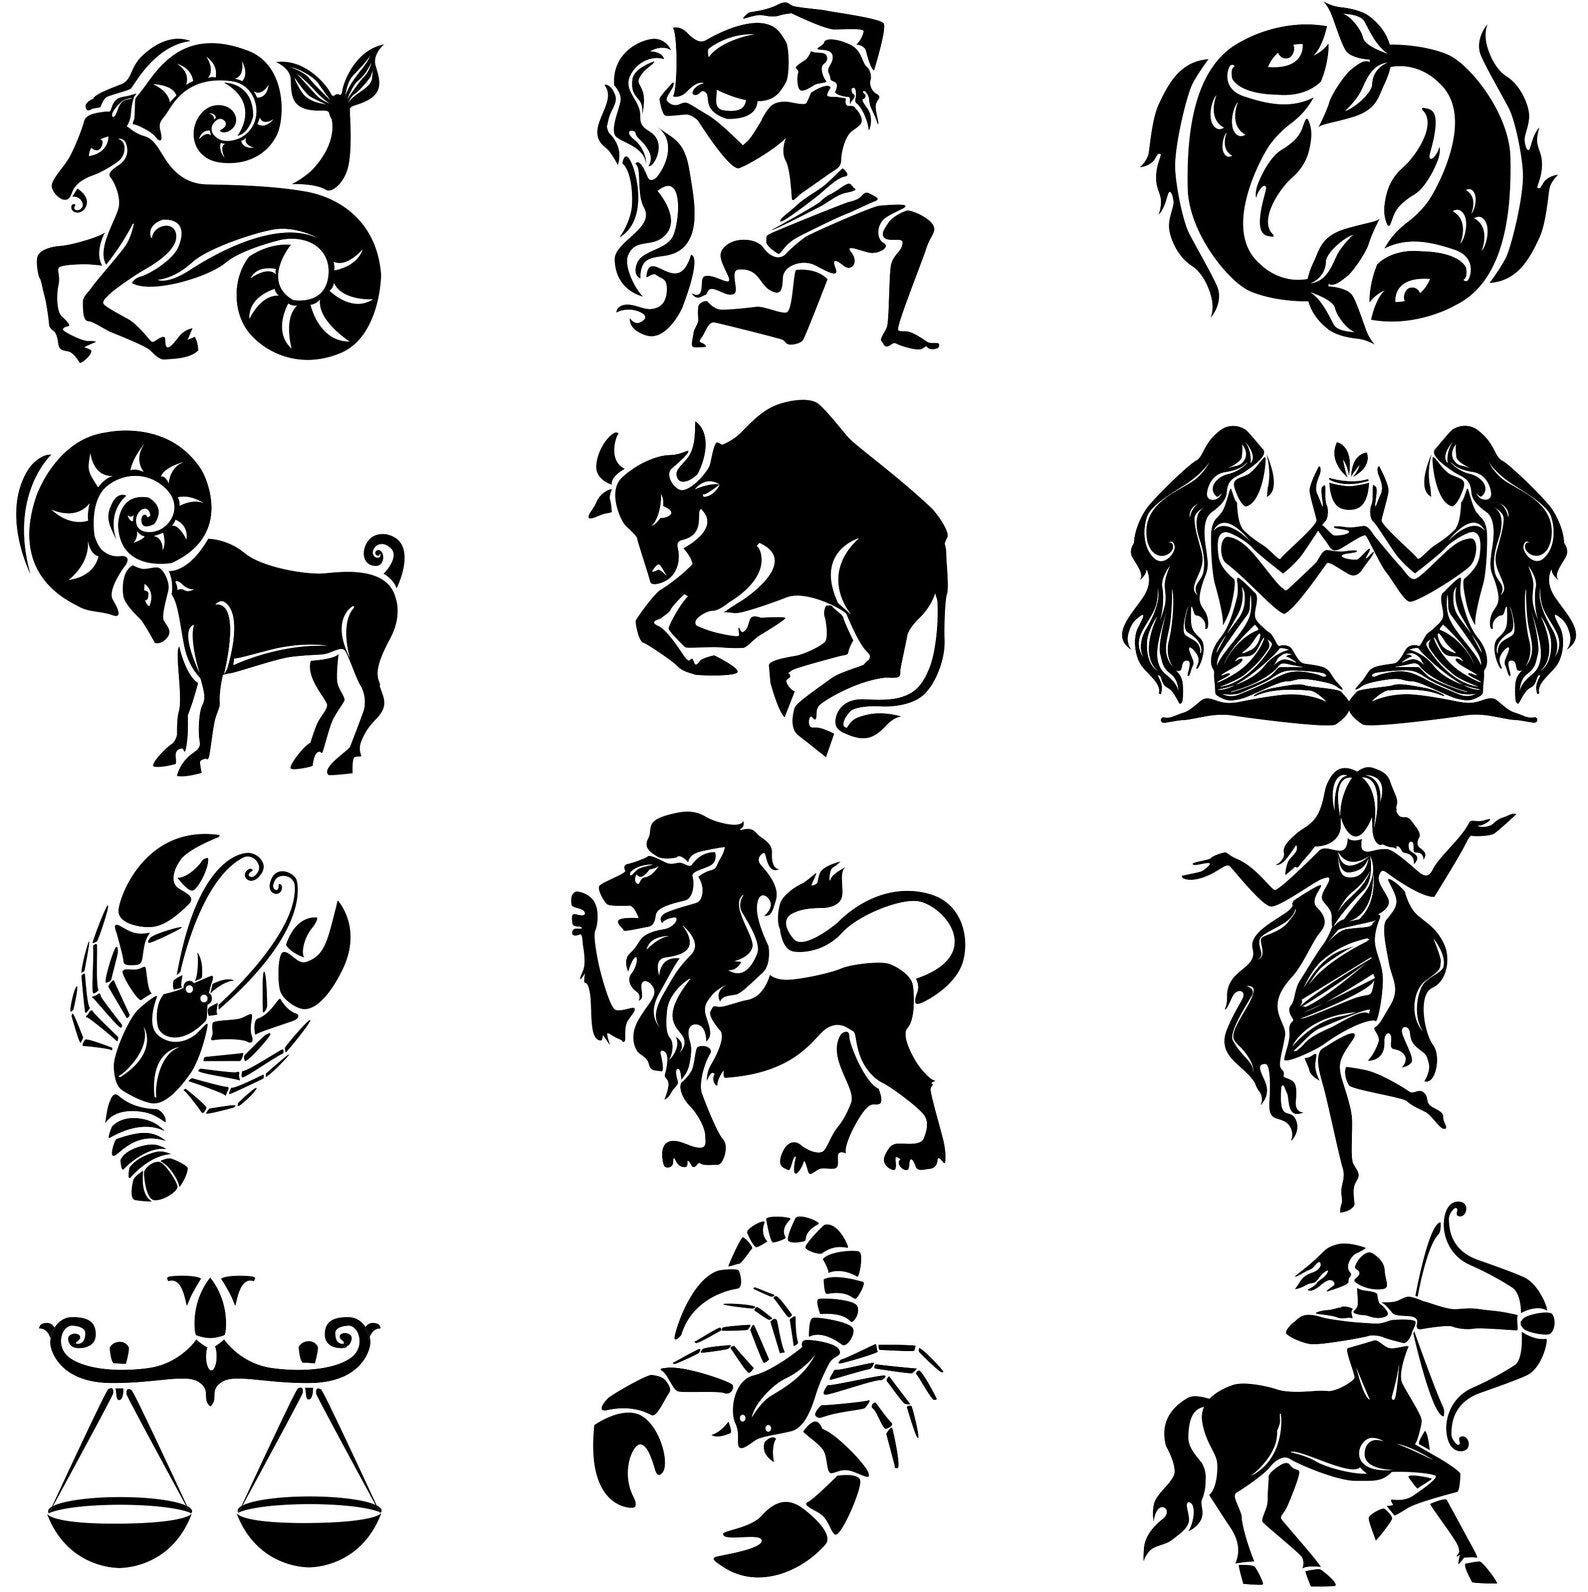 Zodiac signs Chinese zodiac signs Chinese horoscope Aries | Etsy